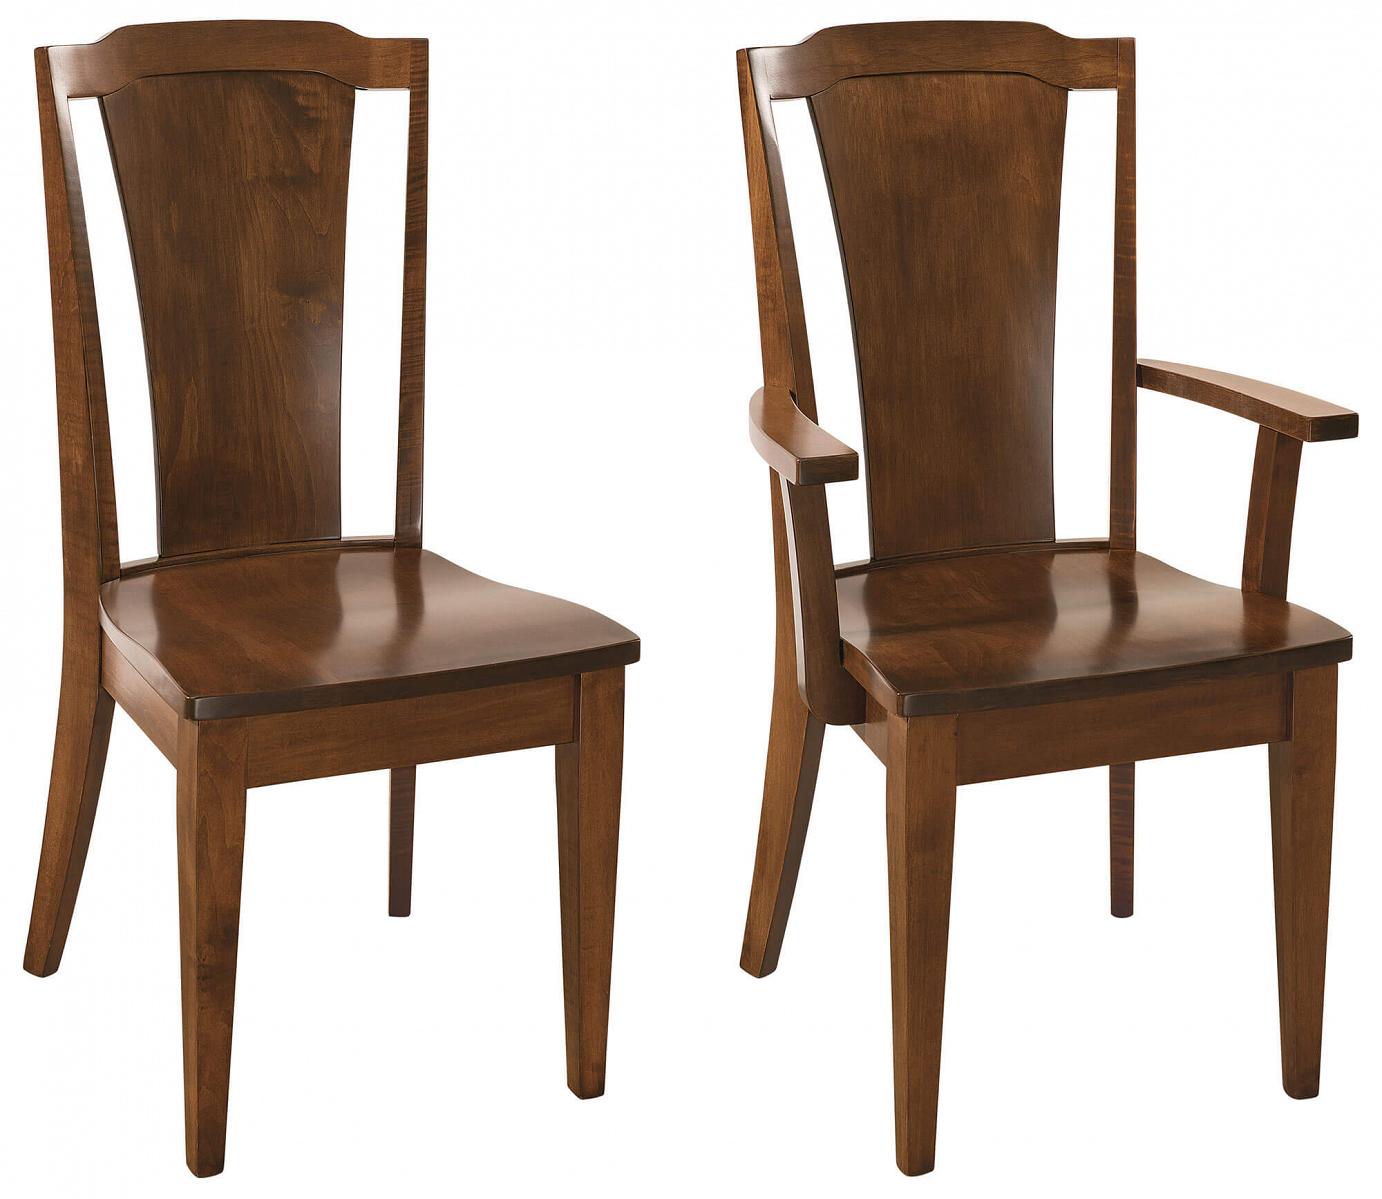 RH Yoder Charleston Chairs